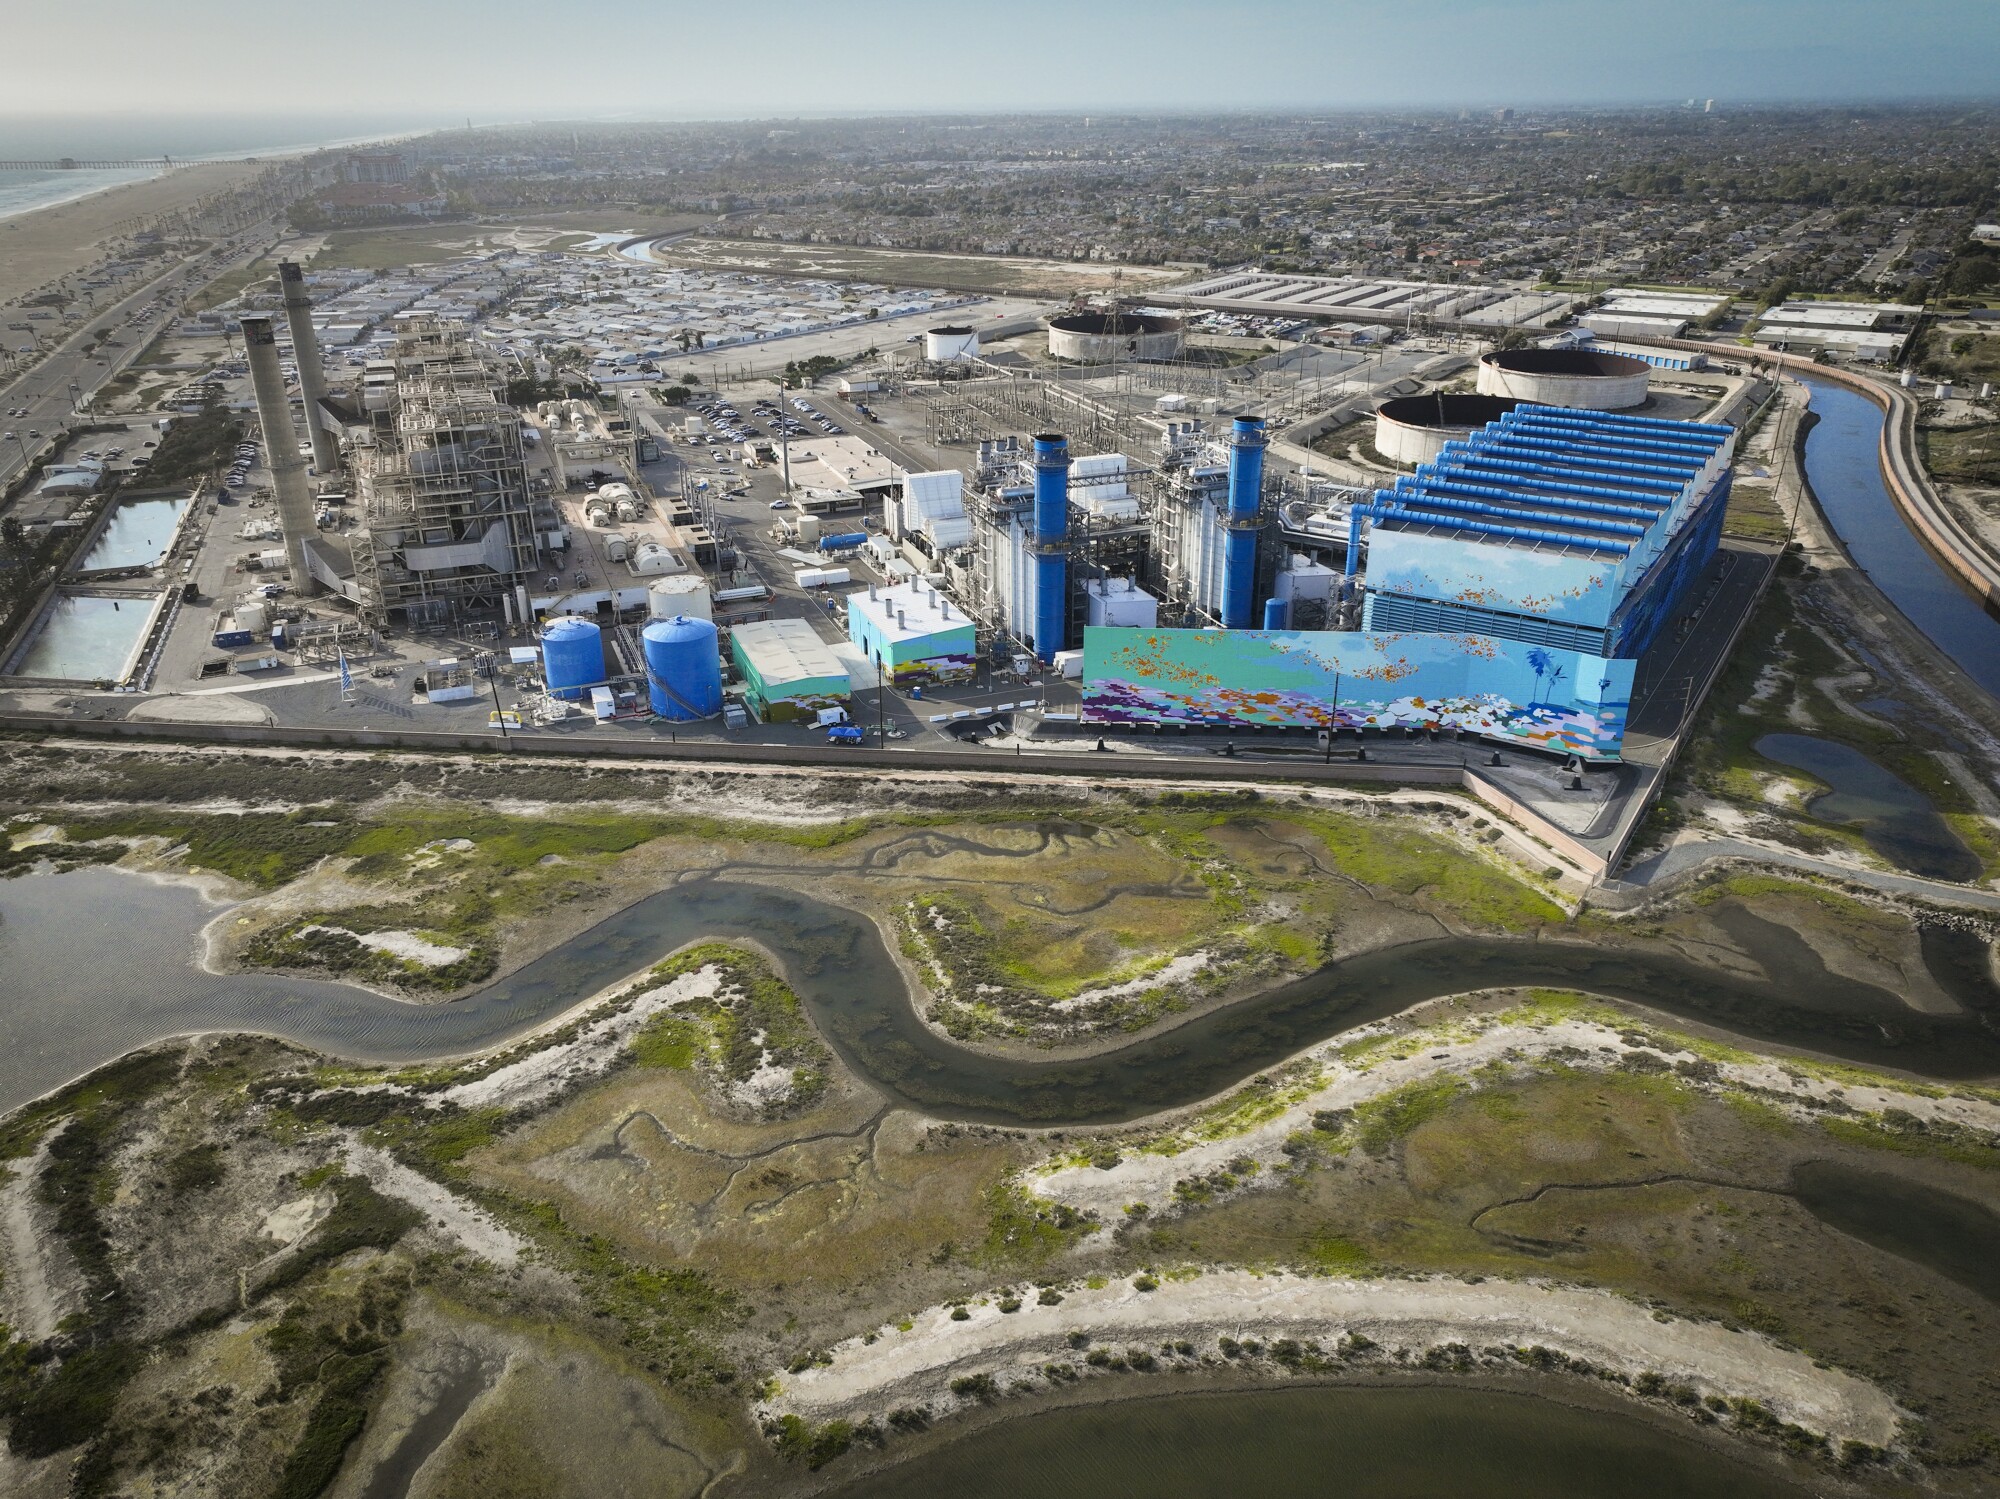 An aerial view of the Huntington Beach Wetlands and the Huntington Beach Energy Center